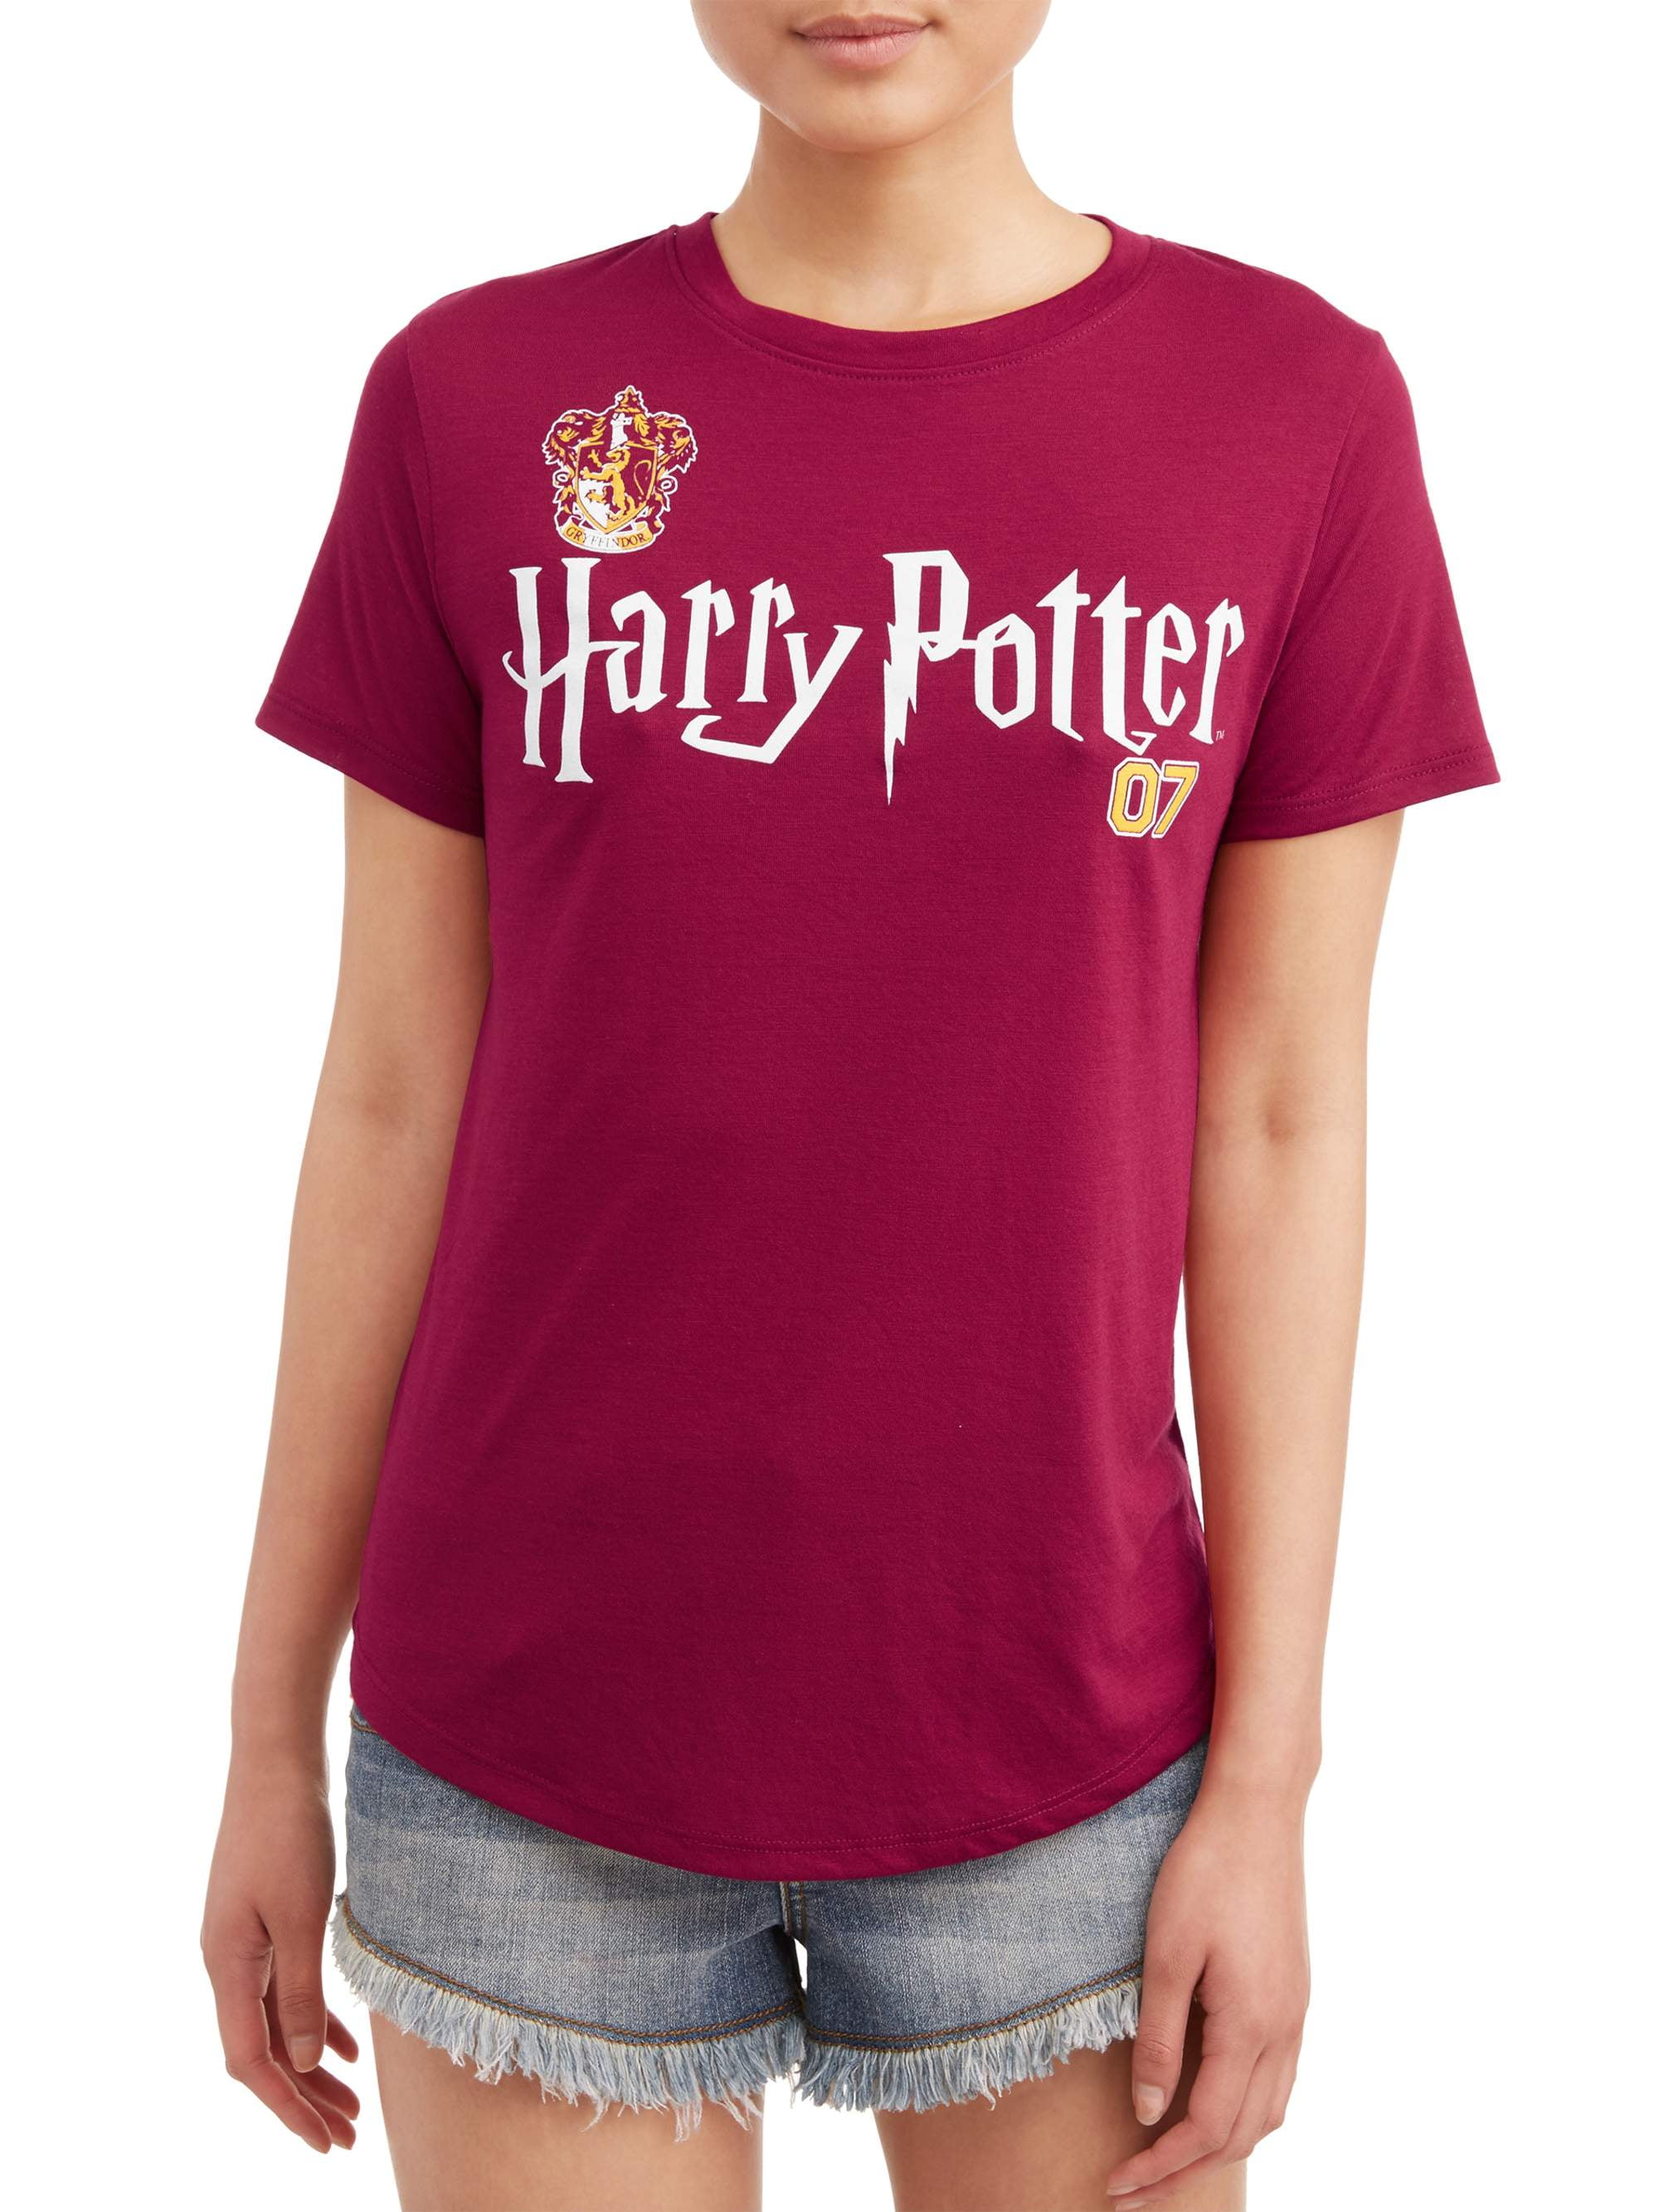 Harry Potter Harry Potter Juniors Varsity Graphic T Shirt Walmart